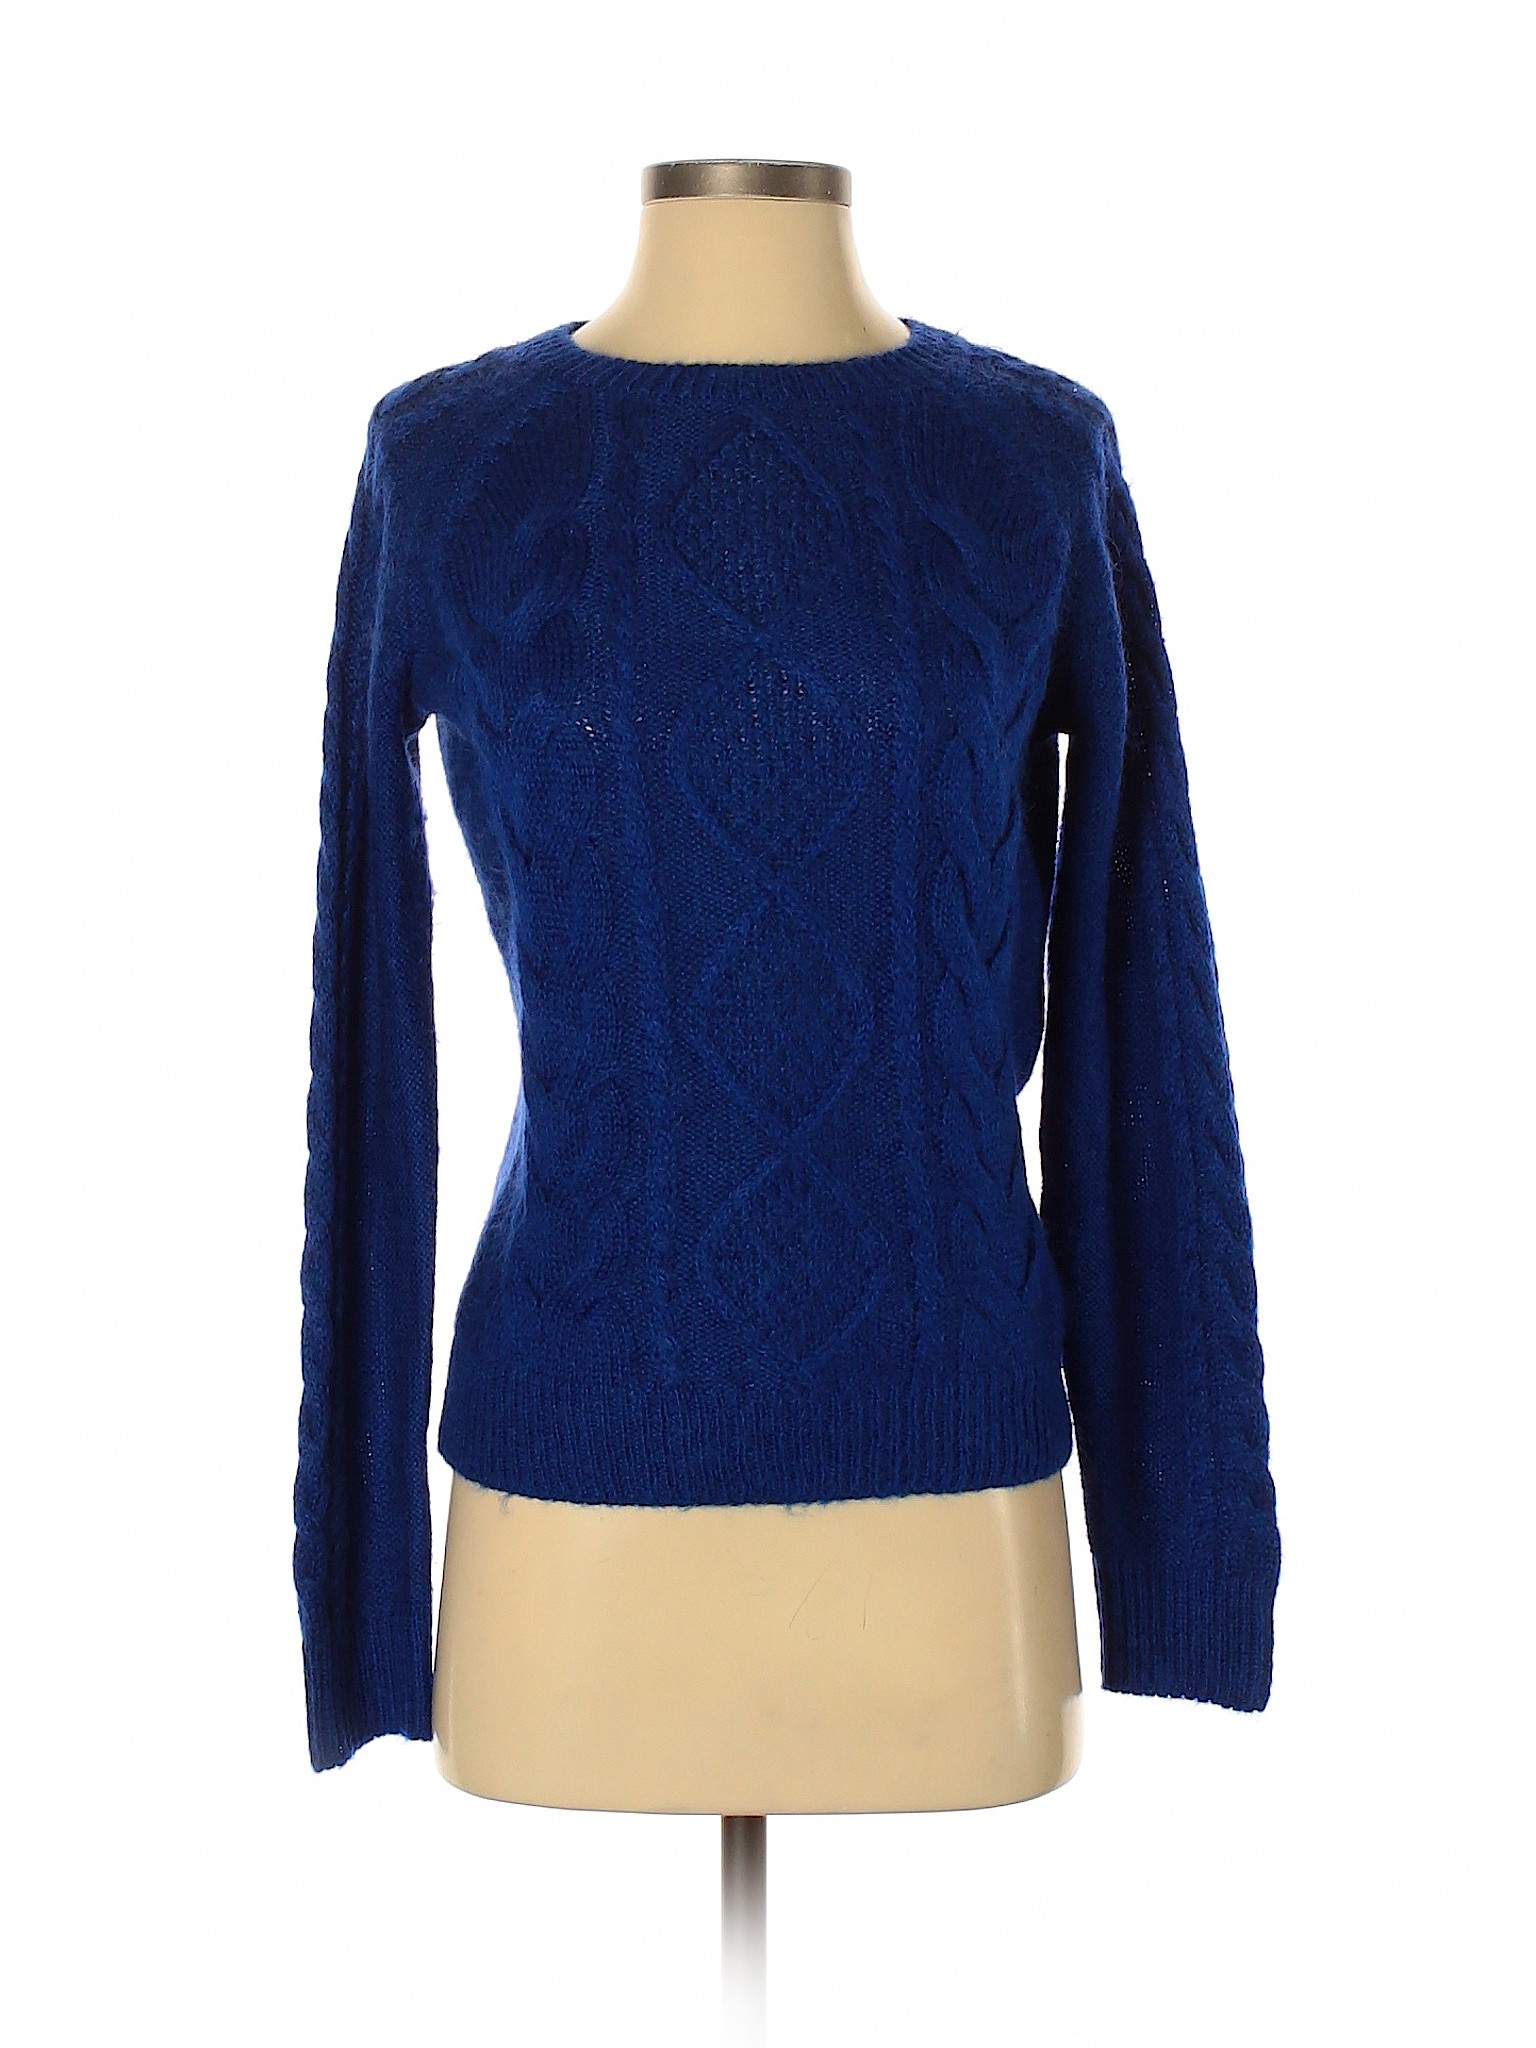 H&M Women Blue Pullover Sweater S | eBay